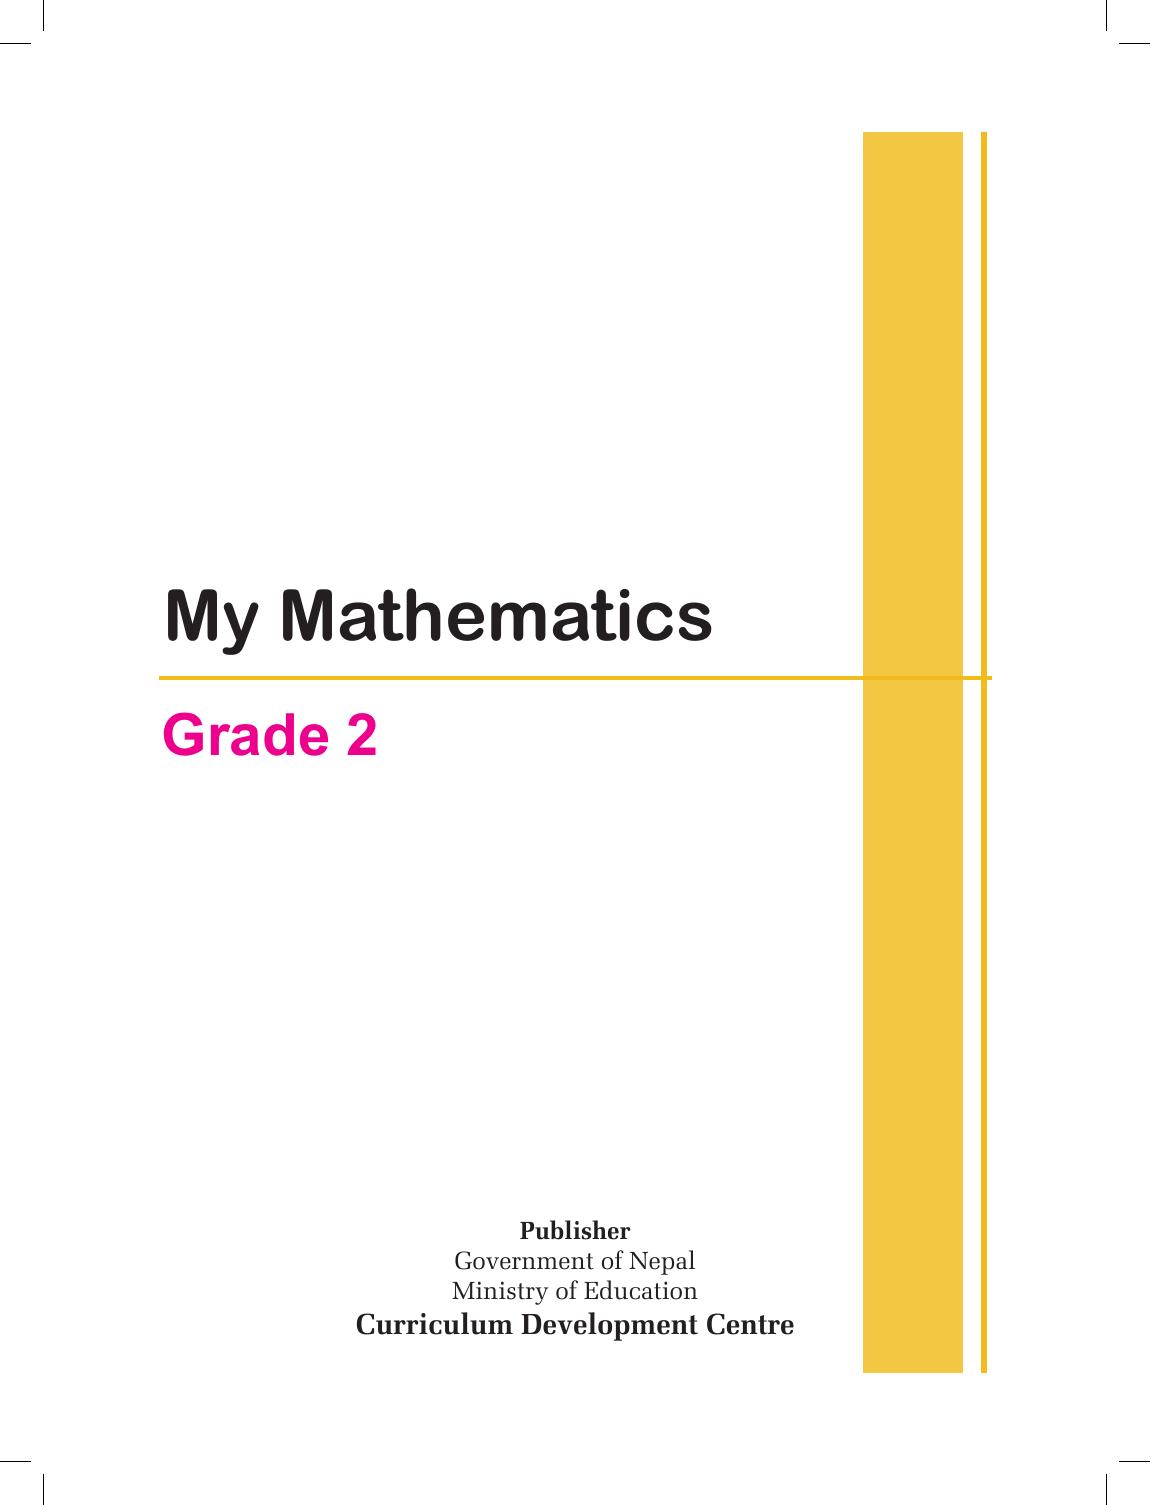 My Mathematics Grade 2